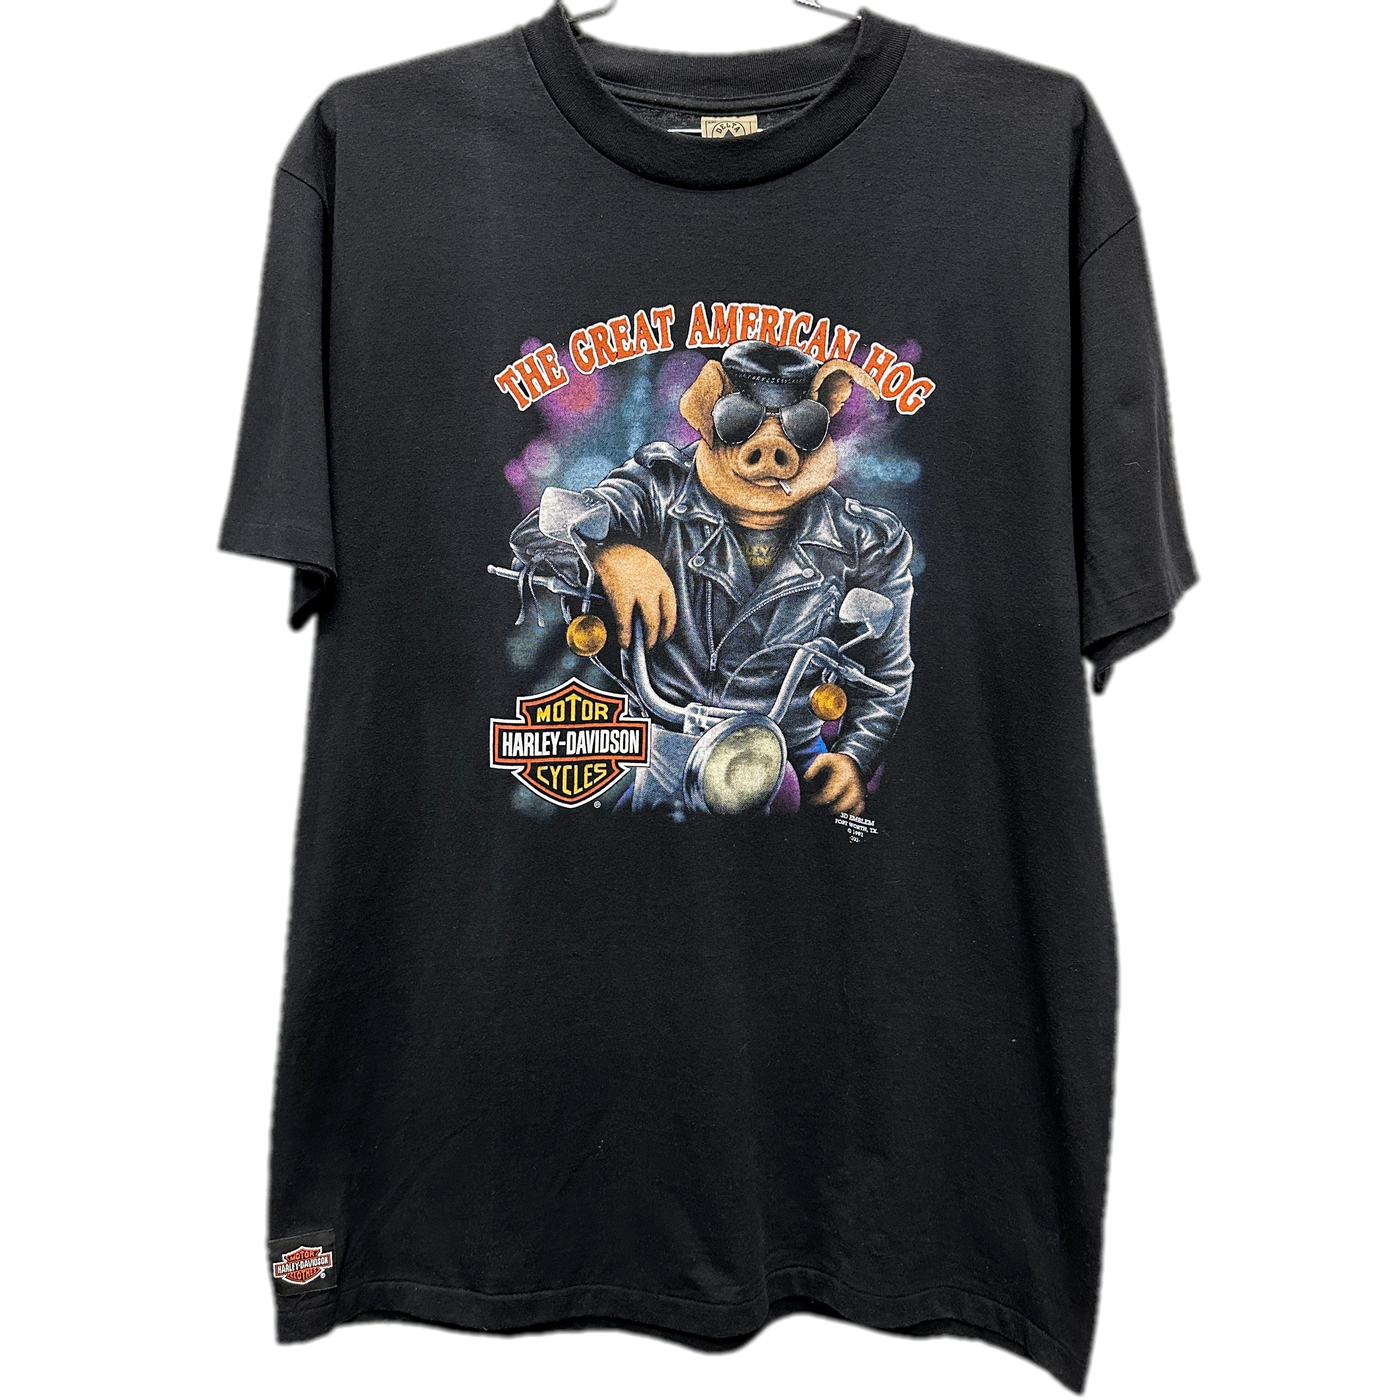 '91 Harley Davidson 3D Emblem American Hog Black T-shirt sz 2XL